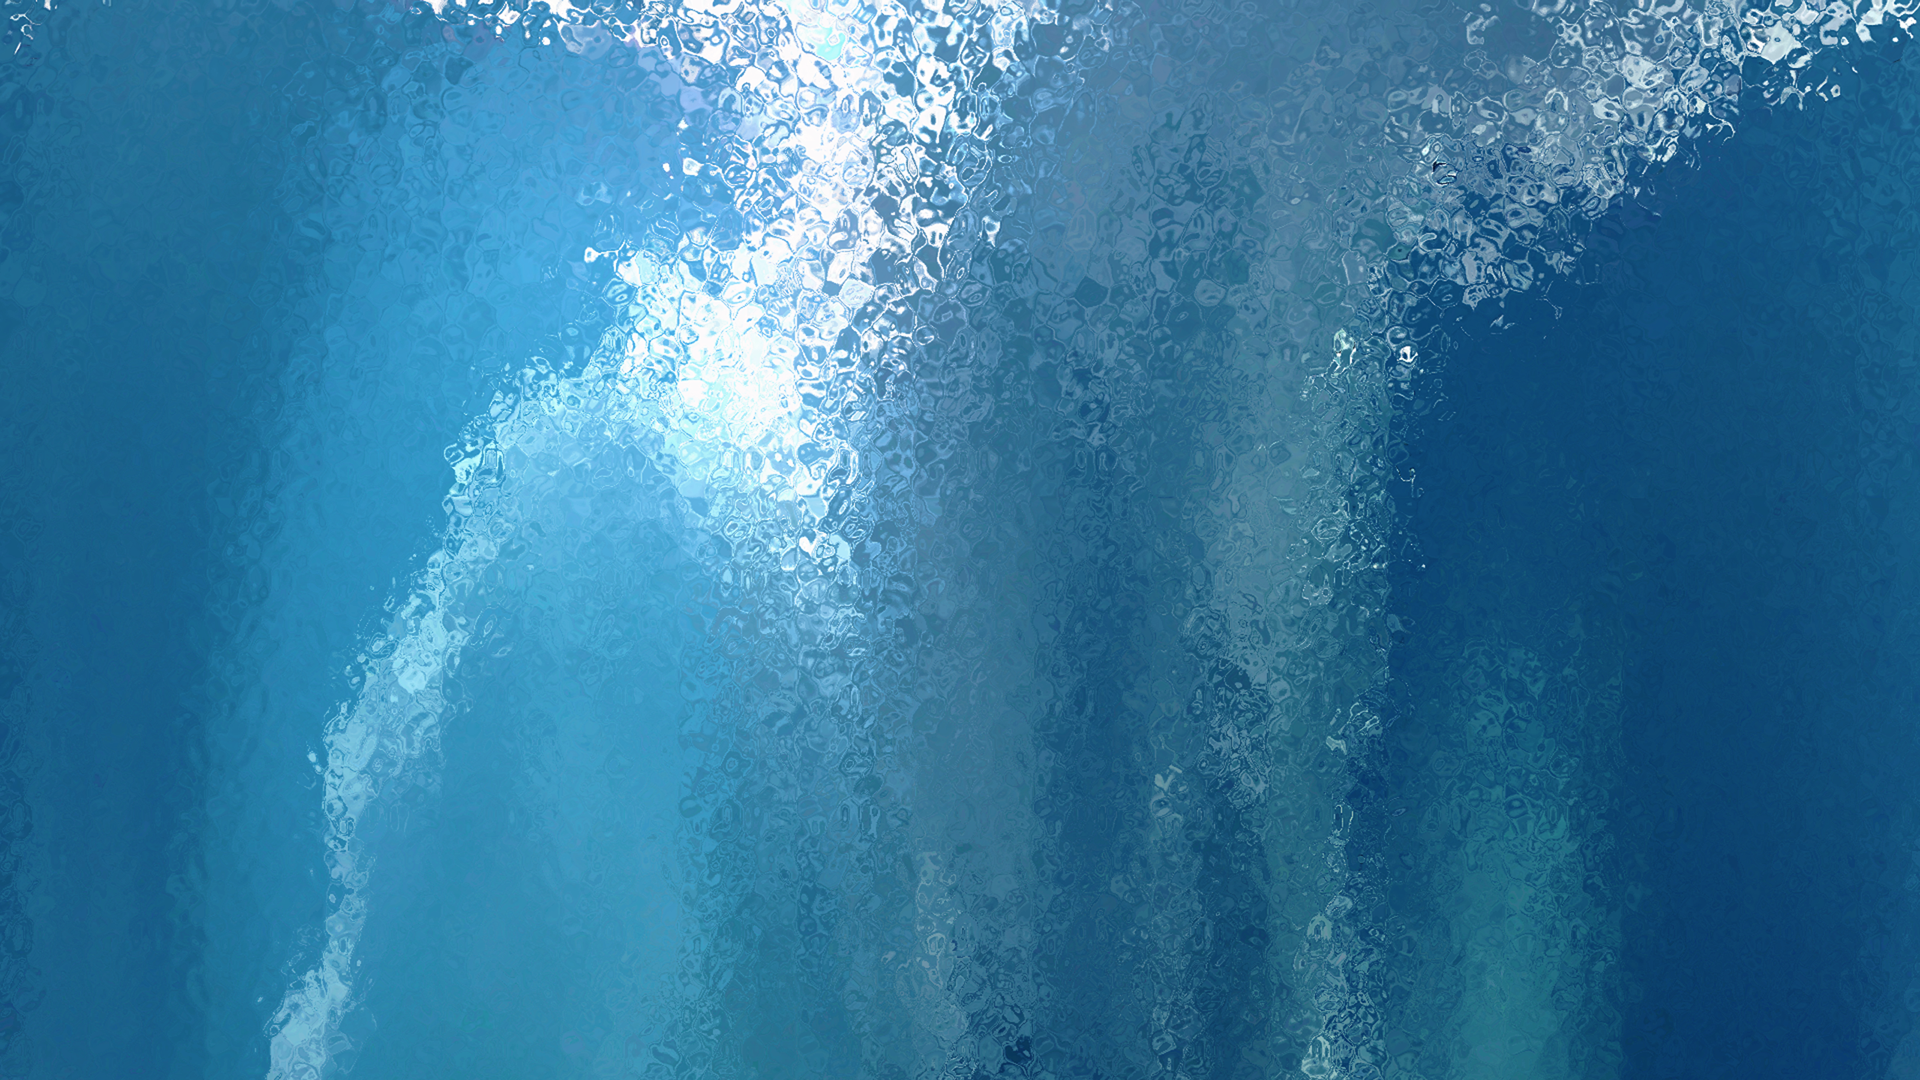 carta da parati ad acqua per pareti,blu,acqua,acqua,turchese,onda